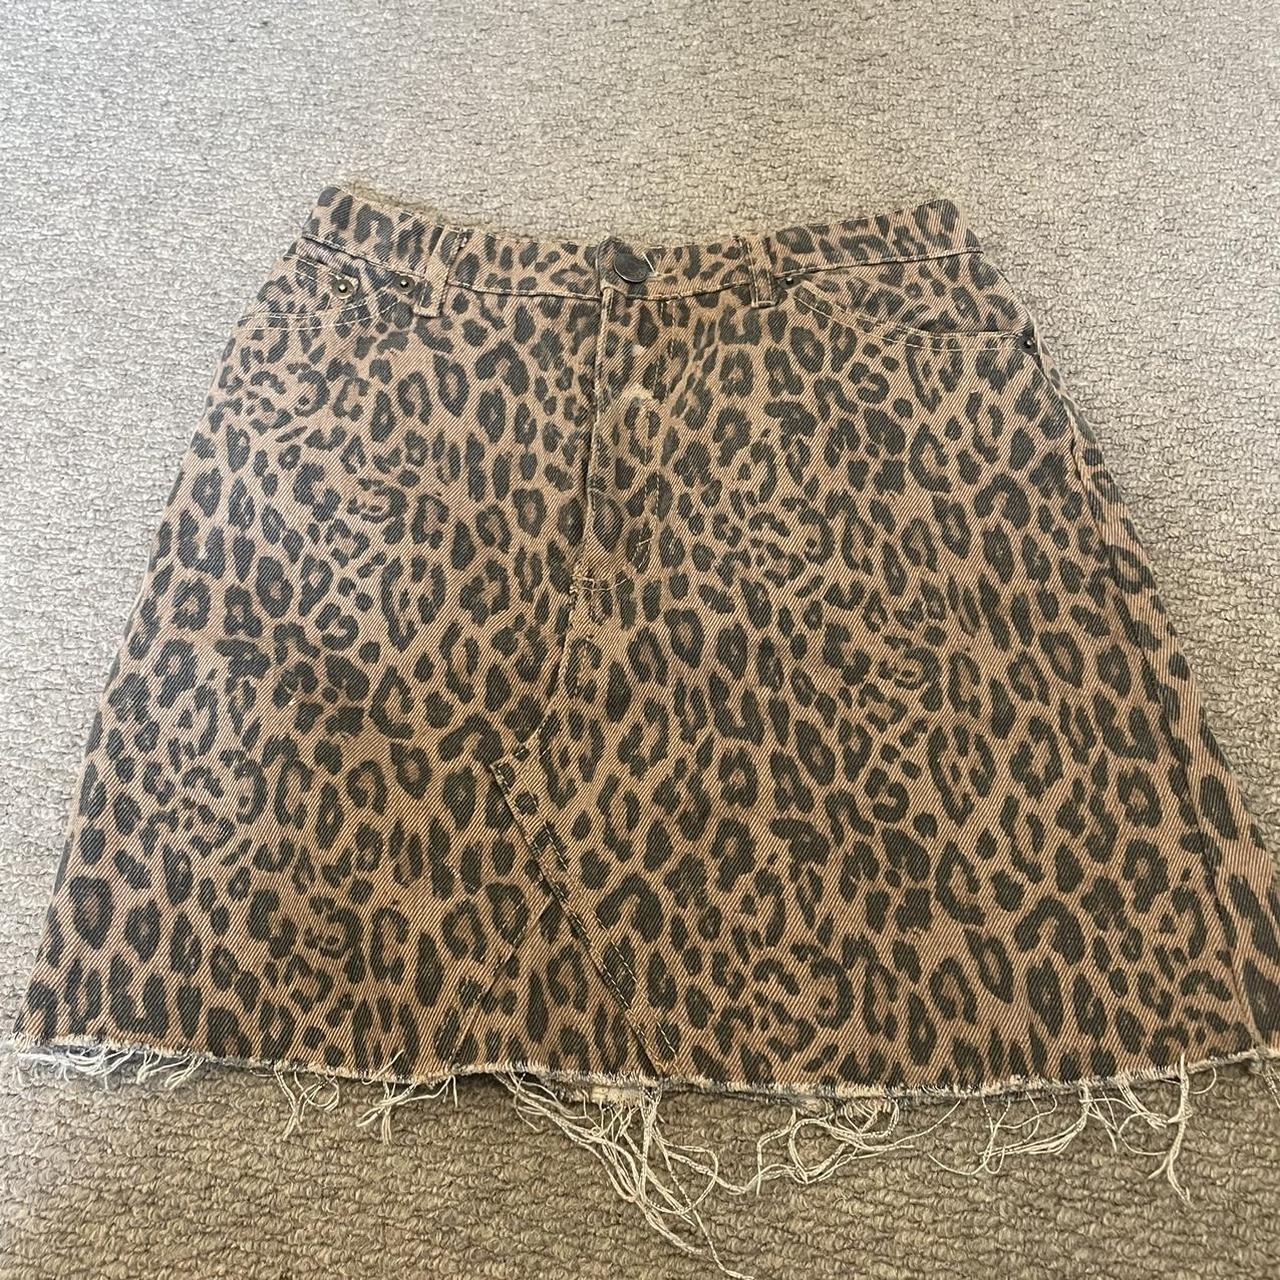 Leopard print denim skirt / MONKI Size 36 - 8... - Depop